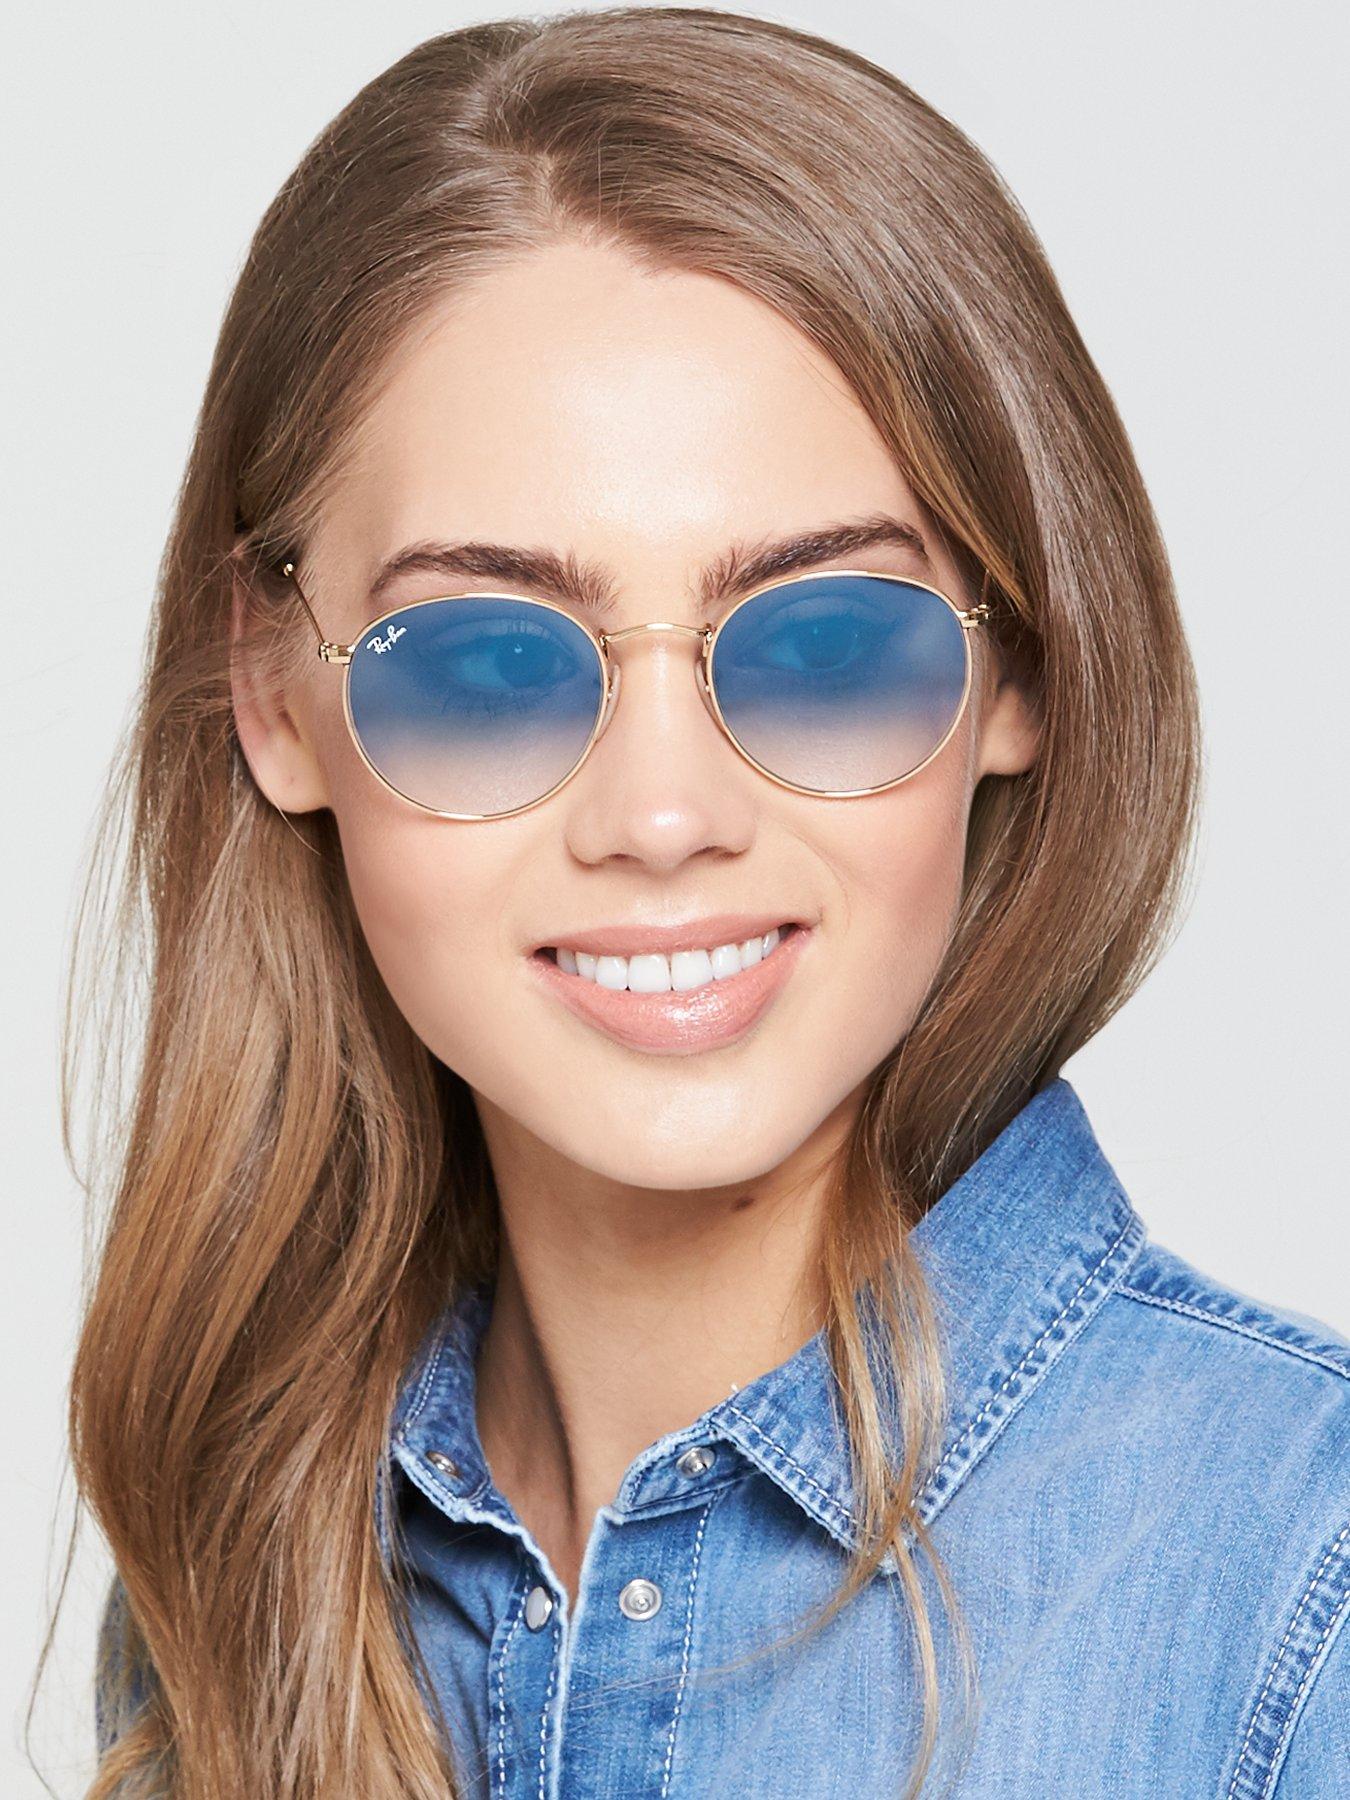 ray ban round sunglasses blue